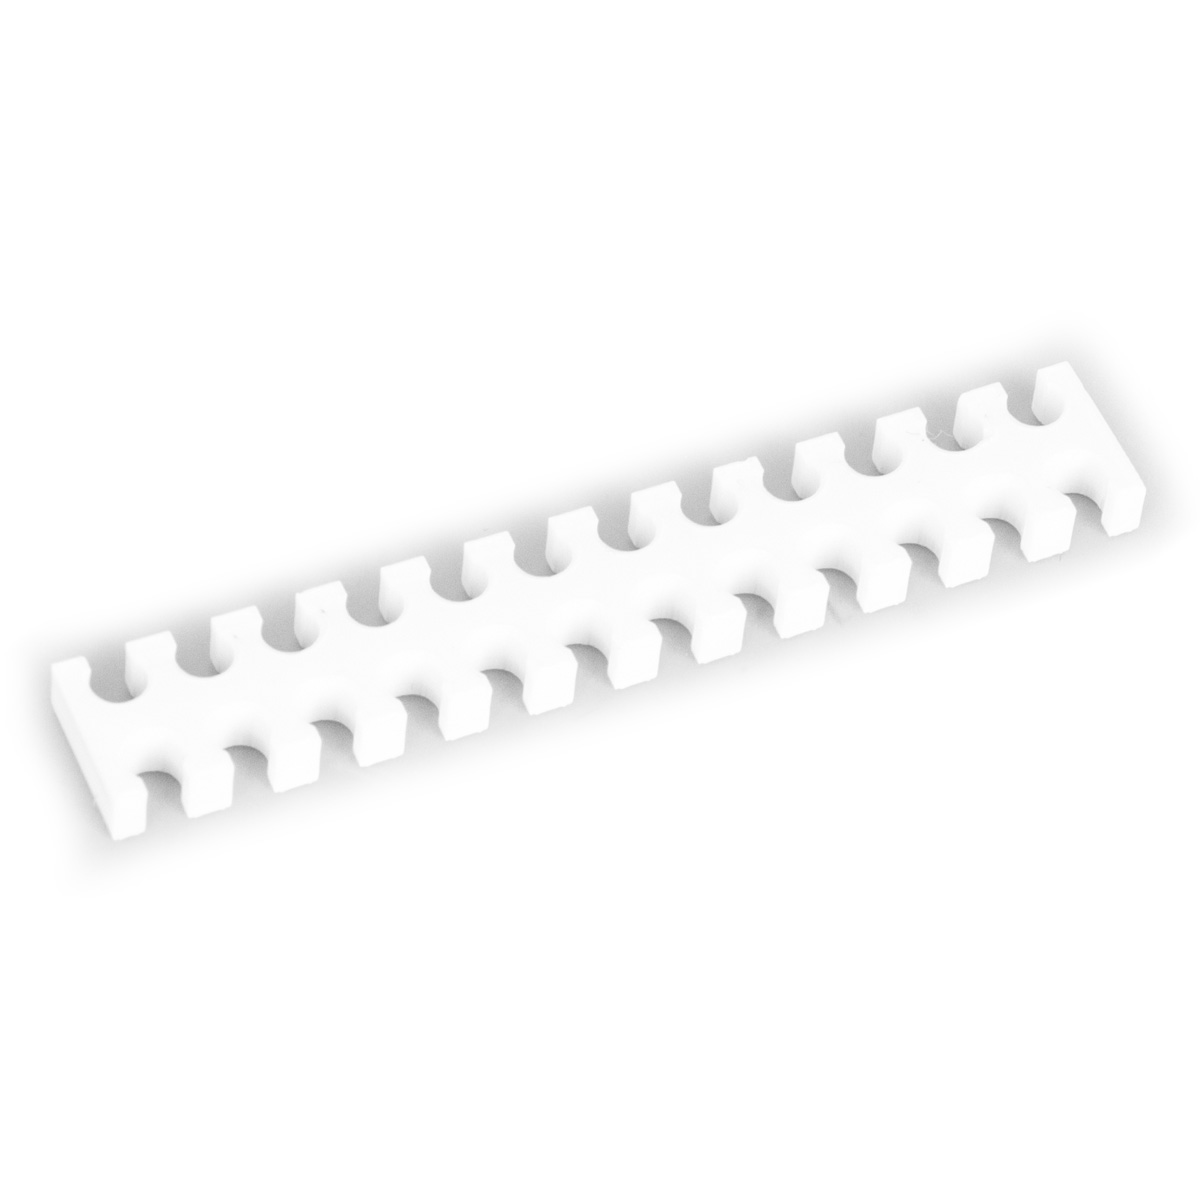 TechForge 24 Slot Cable Comb (Small) 3mm - White